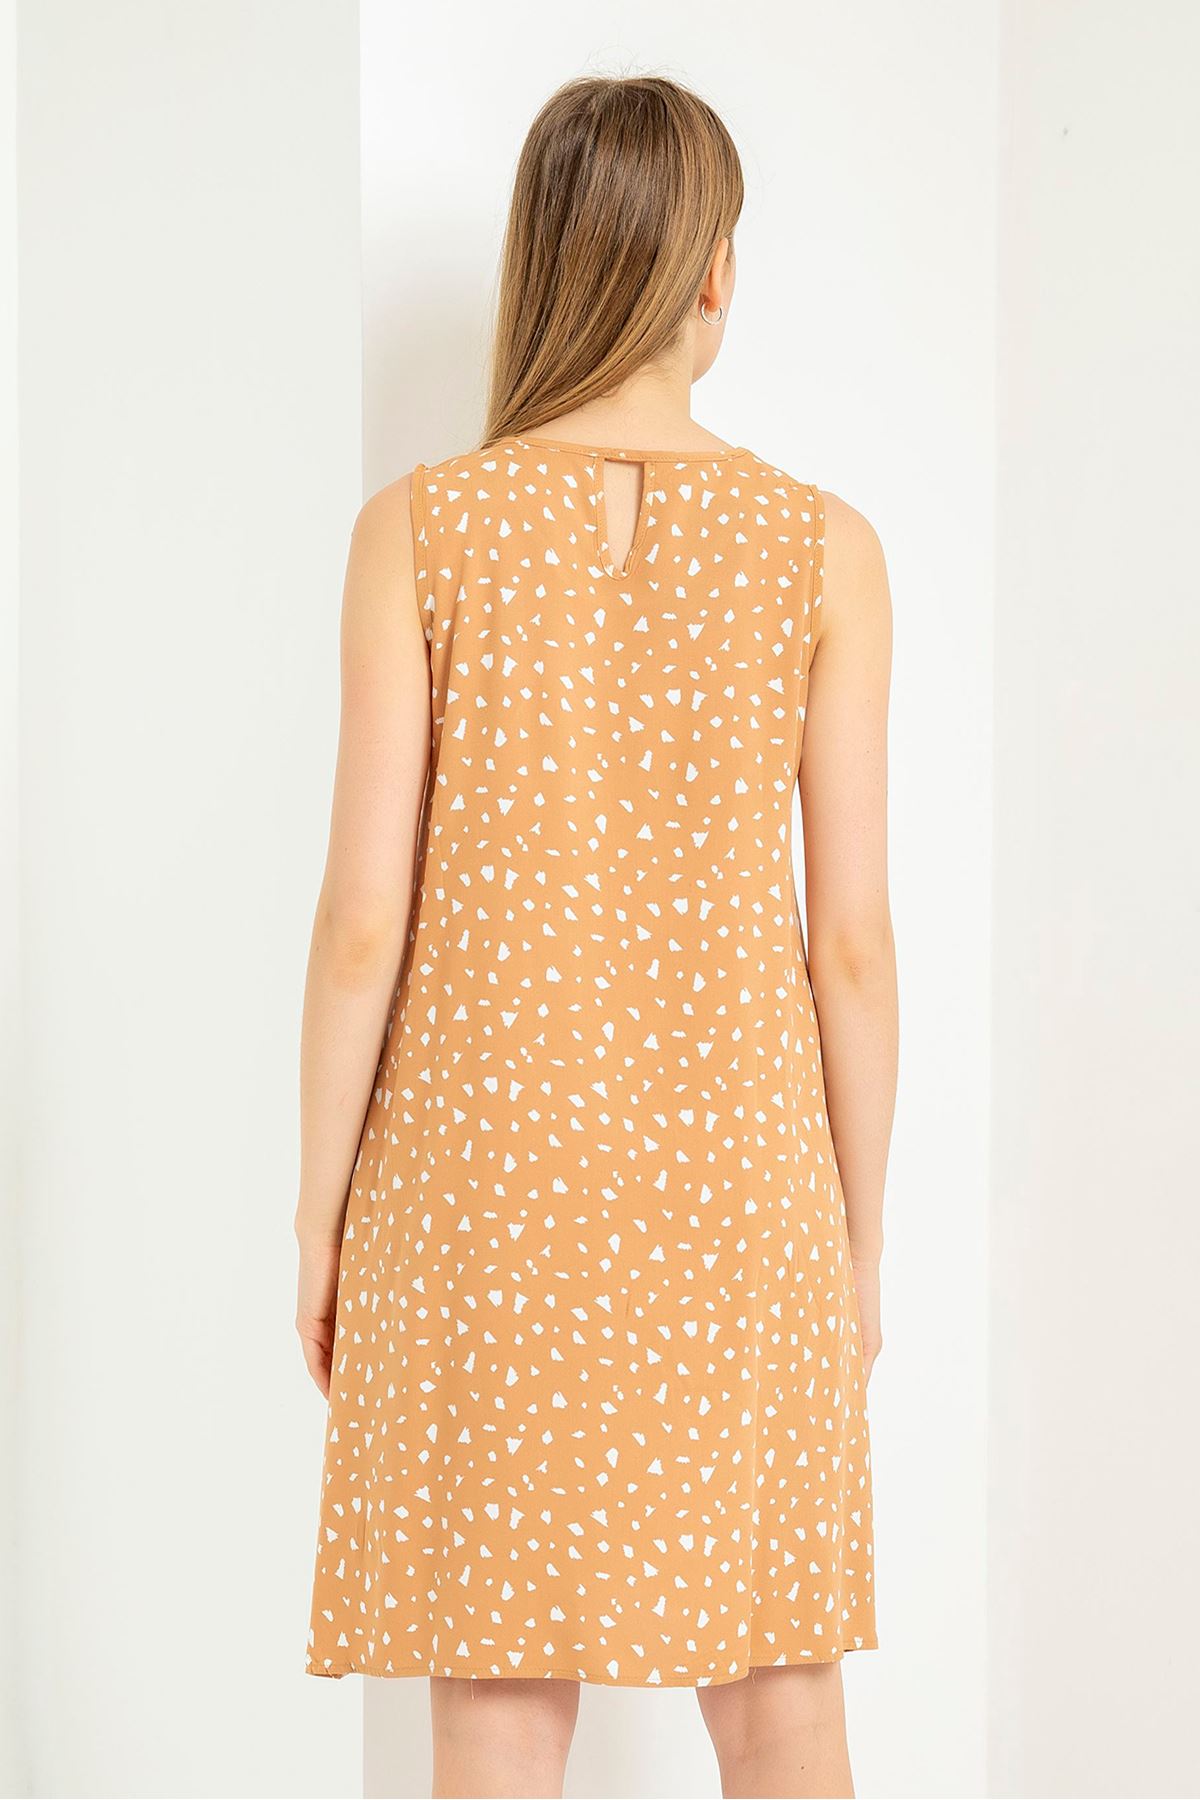 Viscose Fabric Sleeveless Round Full Fit Crispy Print Women Dress - Light Brown